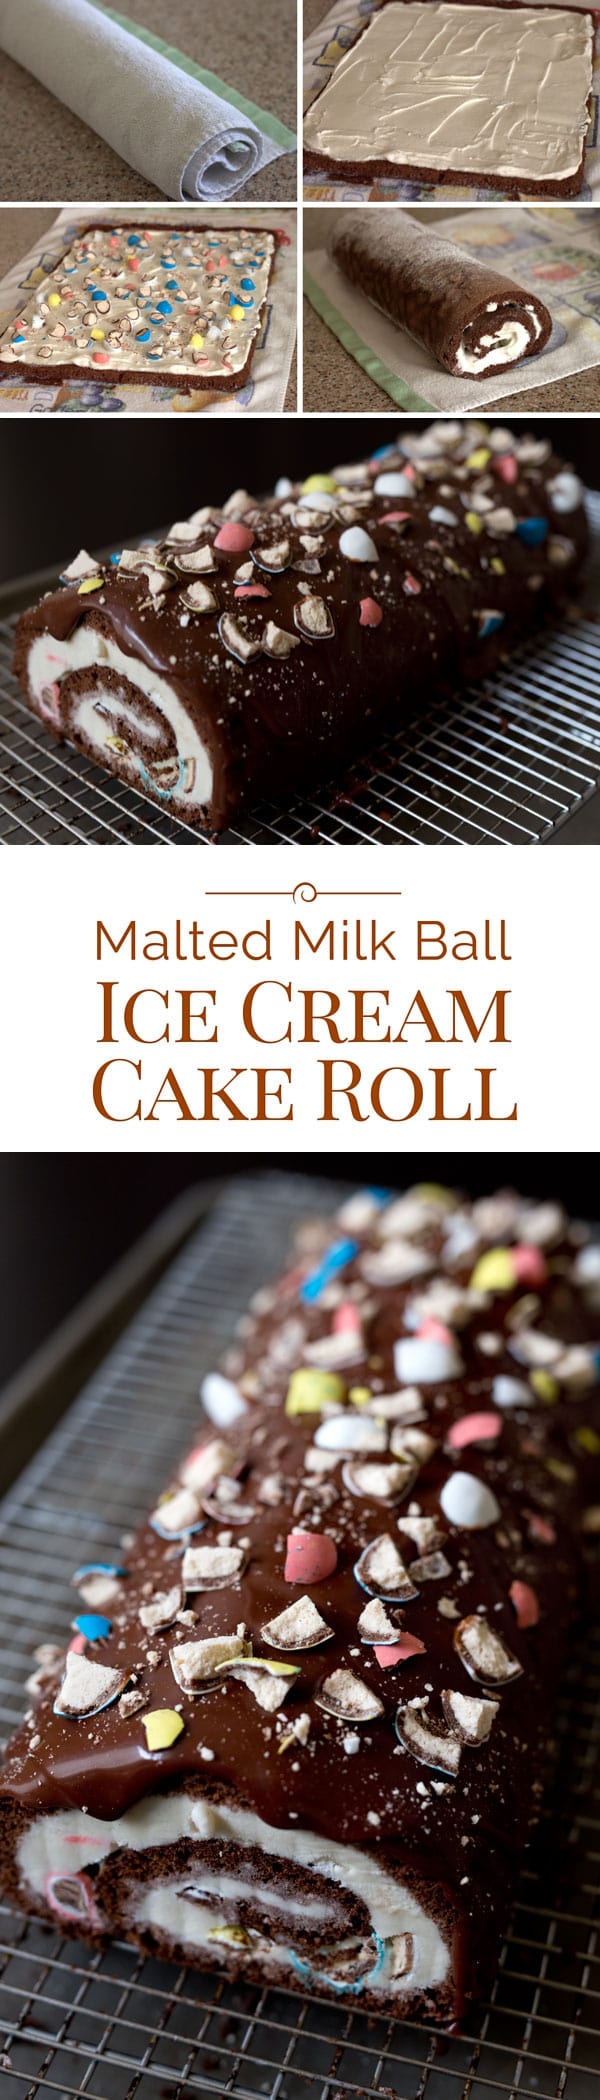 Malted-Milk-Ball-Ice-Cream-Cake-Roll-Collage-Barbara-Bakes